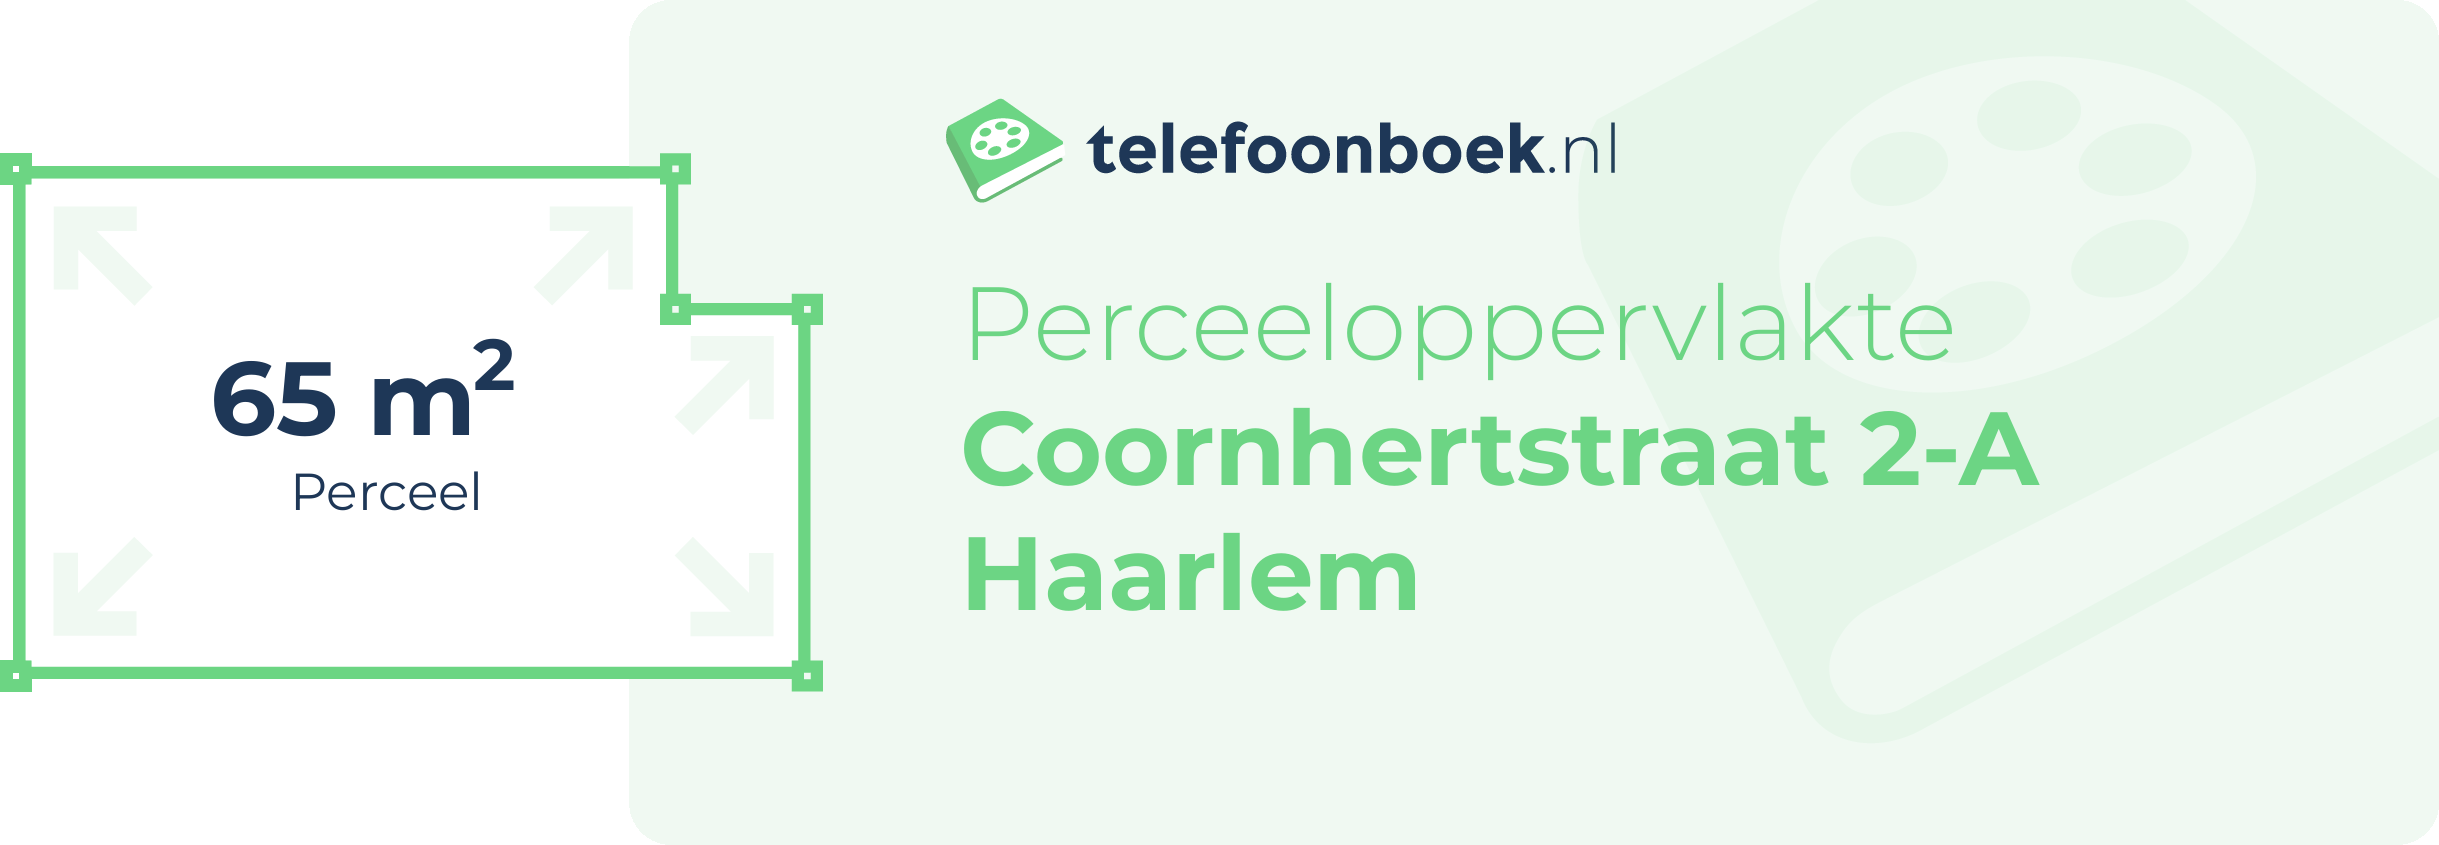 Perceeloppervlakte Coornhertstraat 2-A Haarlem